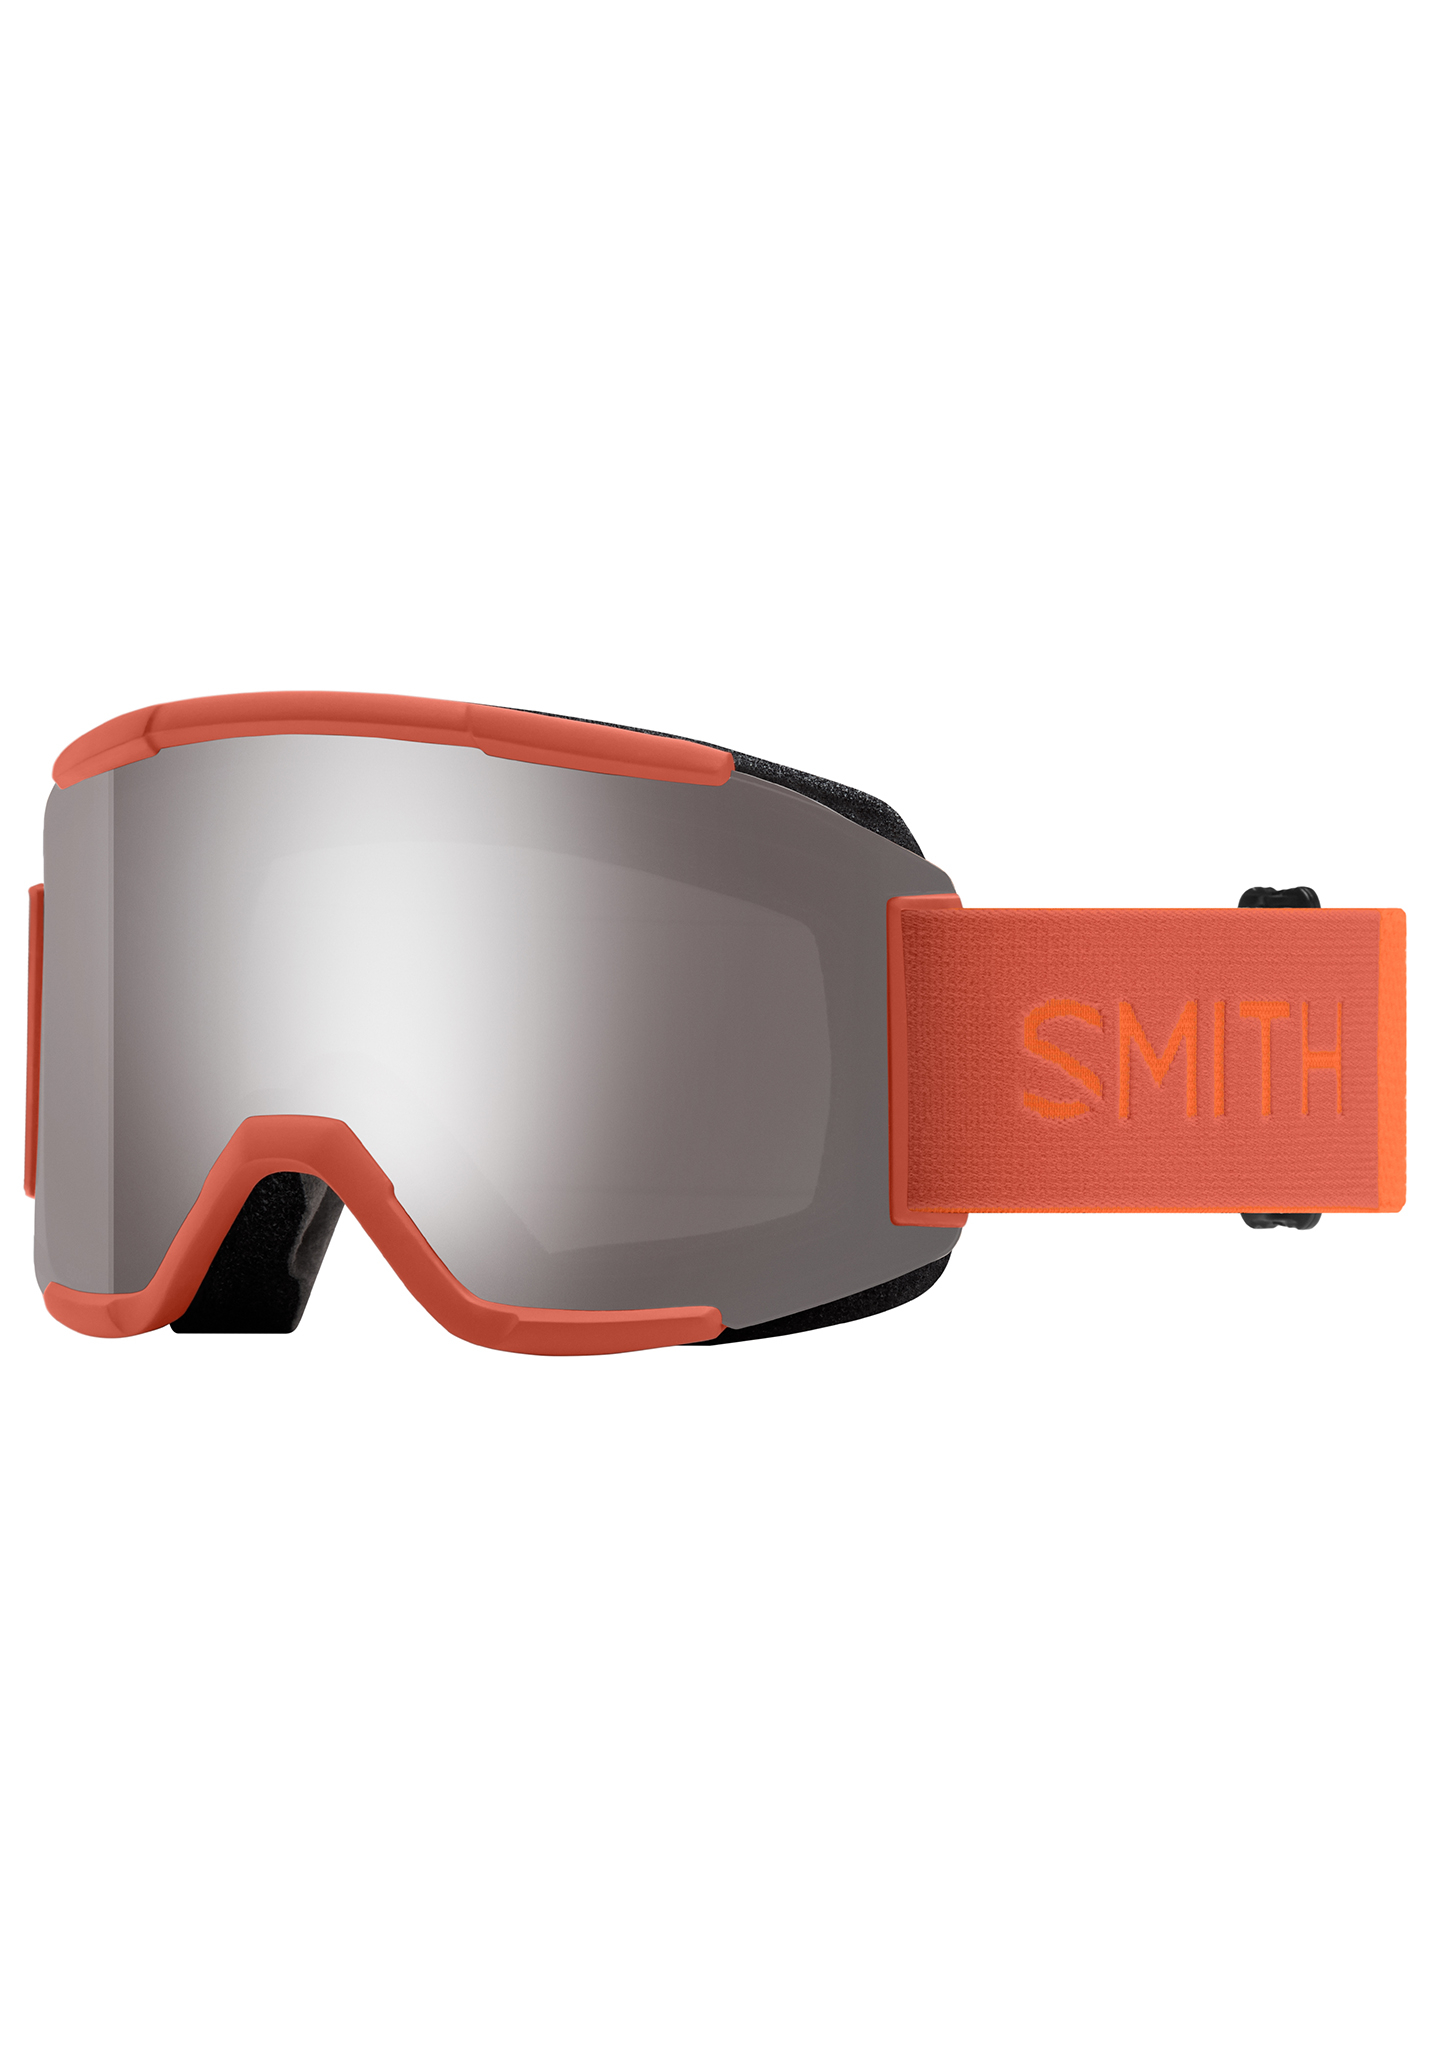 Smith Squad Snowboardbrillen roter mergel One Size